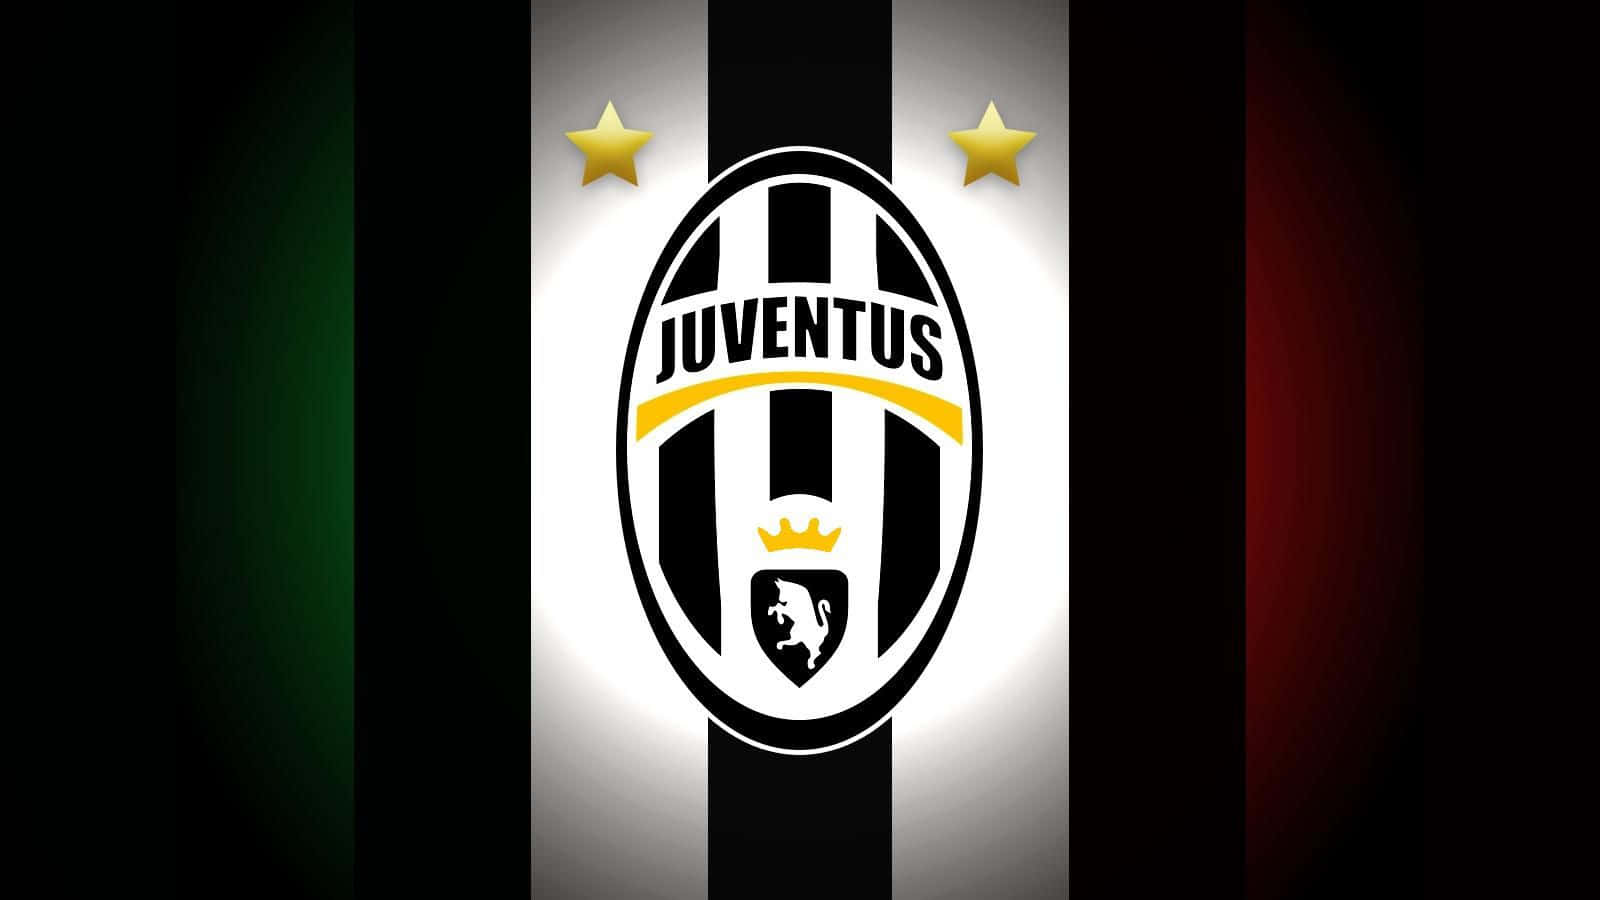 Juventus celebrates their 8th consecutive Serie A title